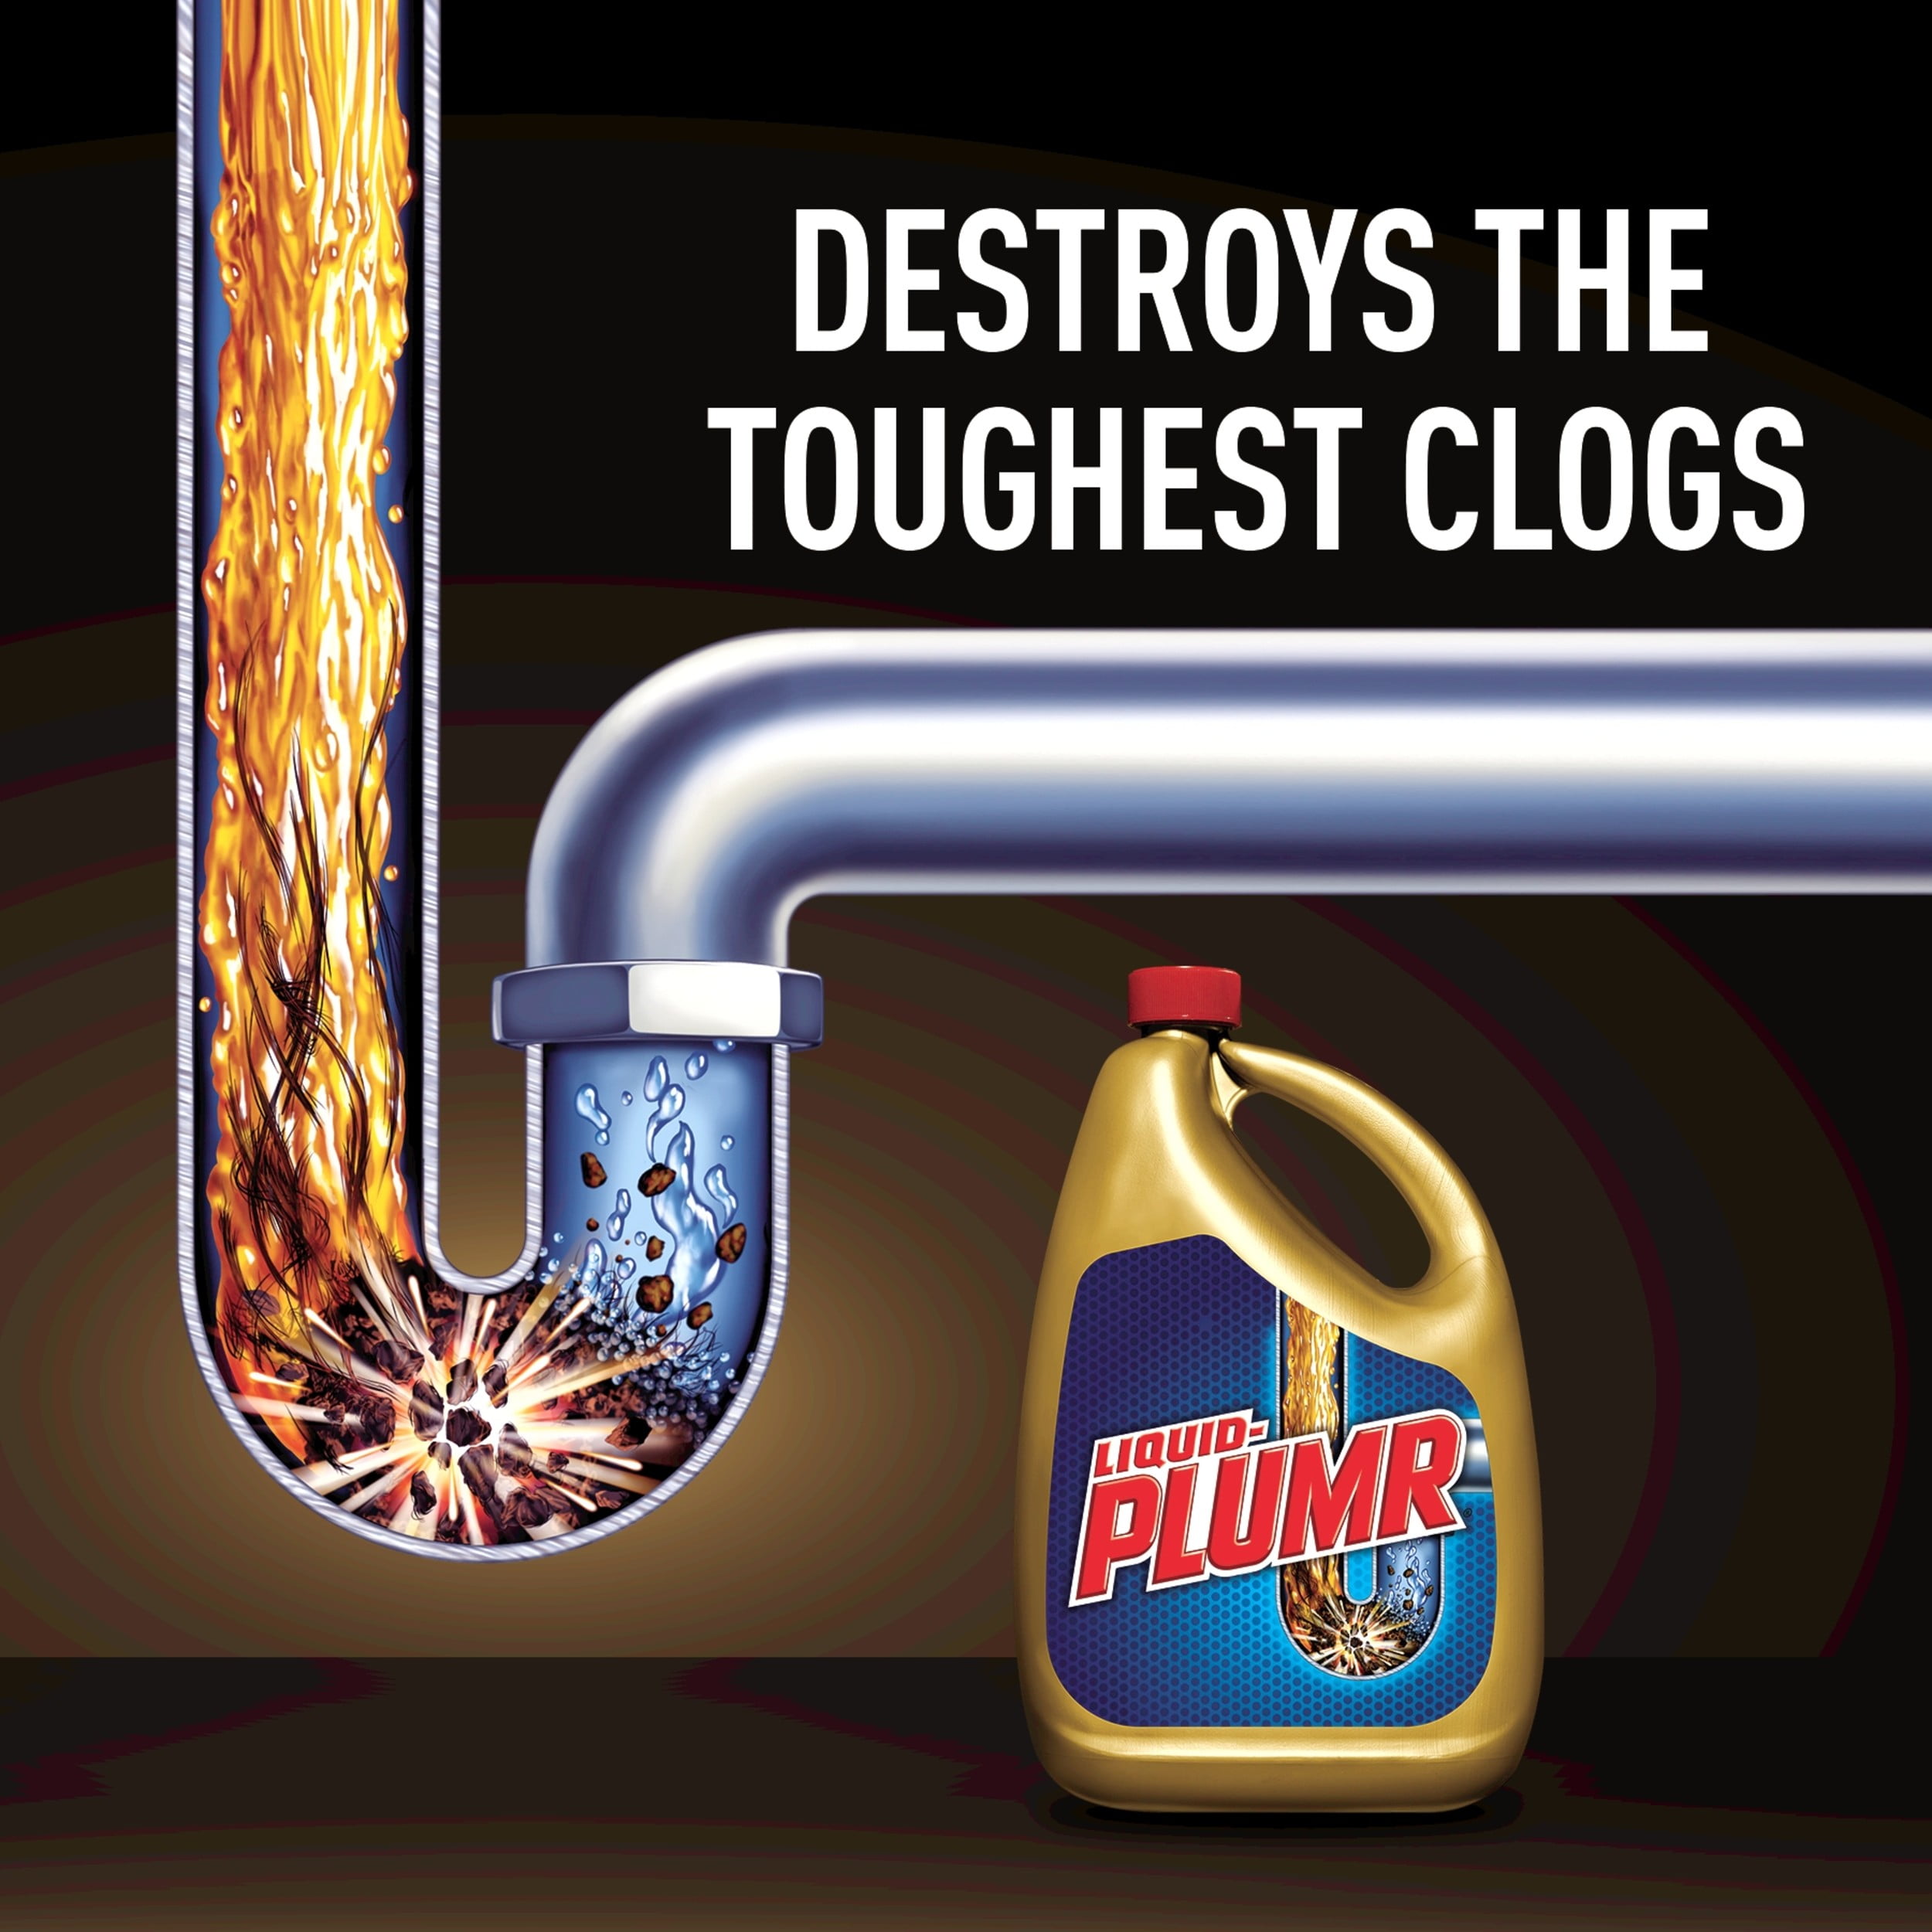 Liquid-Plumr 128 oz. Industrial Strength Gel Drain Cleaner and